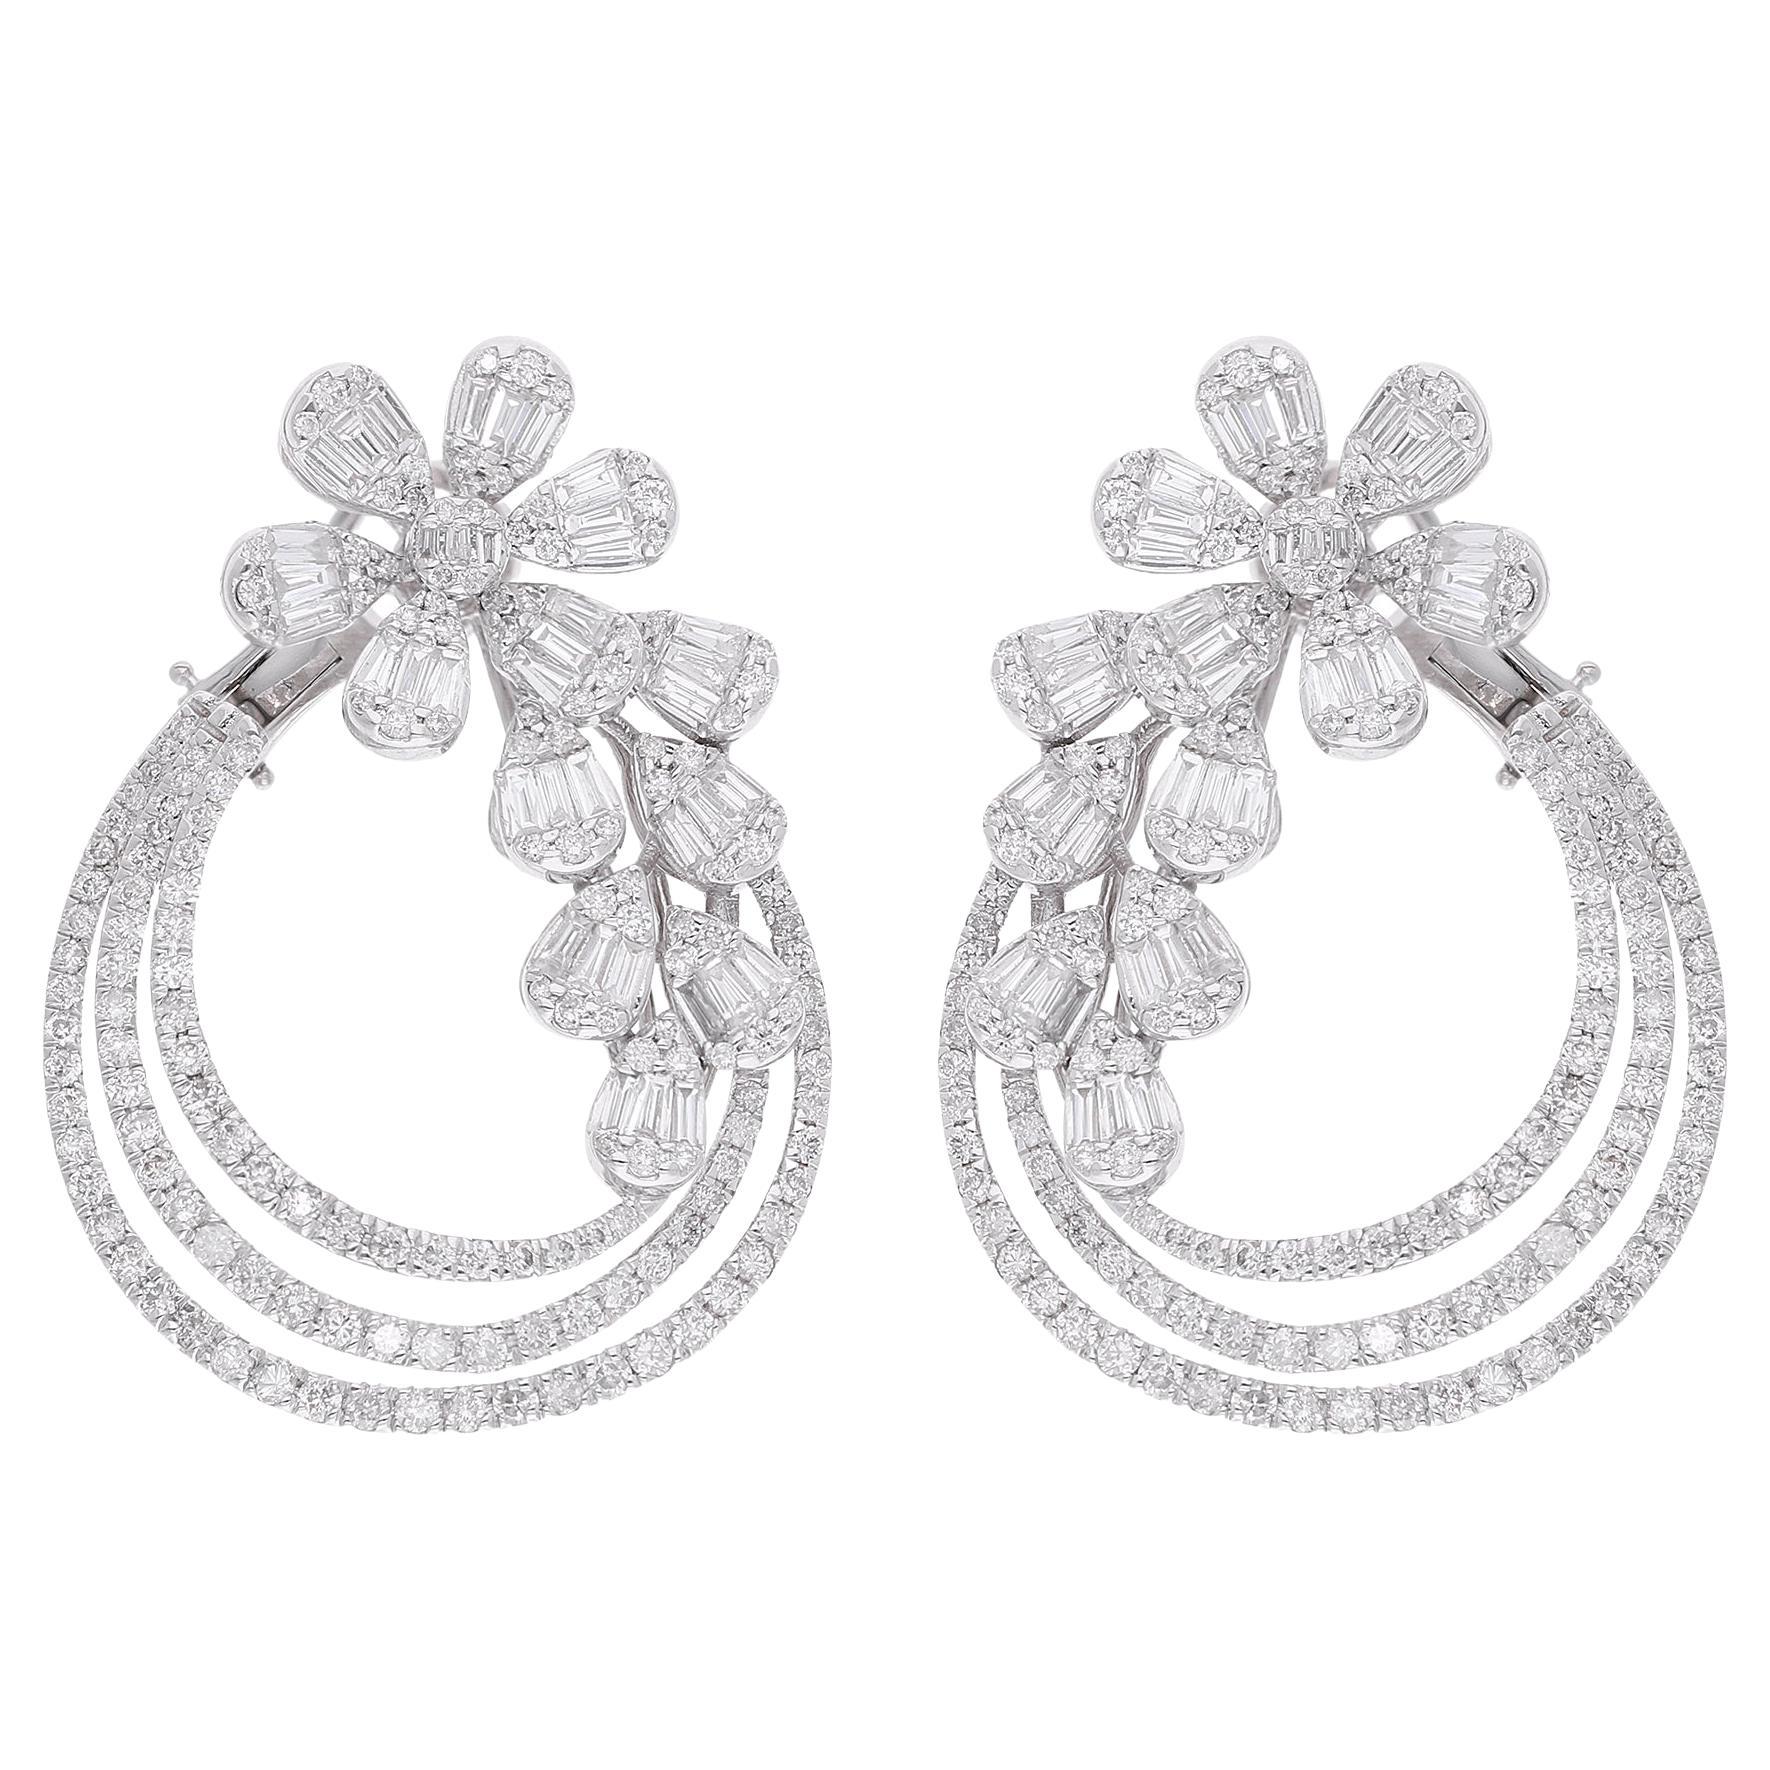 4.31 Carat Baguette Round Diamond Earrings 18 Karat White Gold Handmade Jewelry